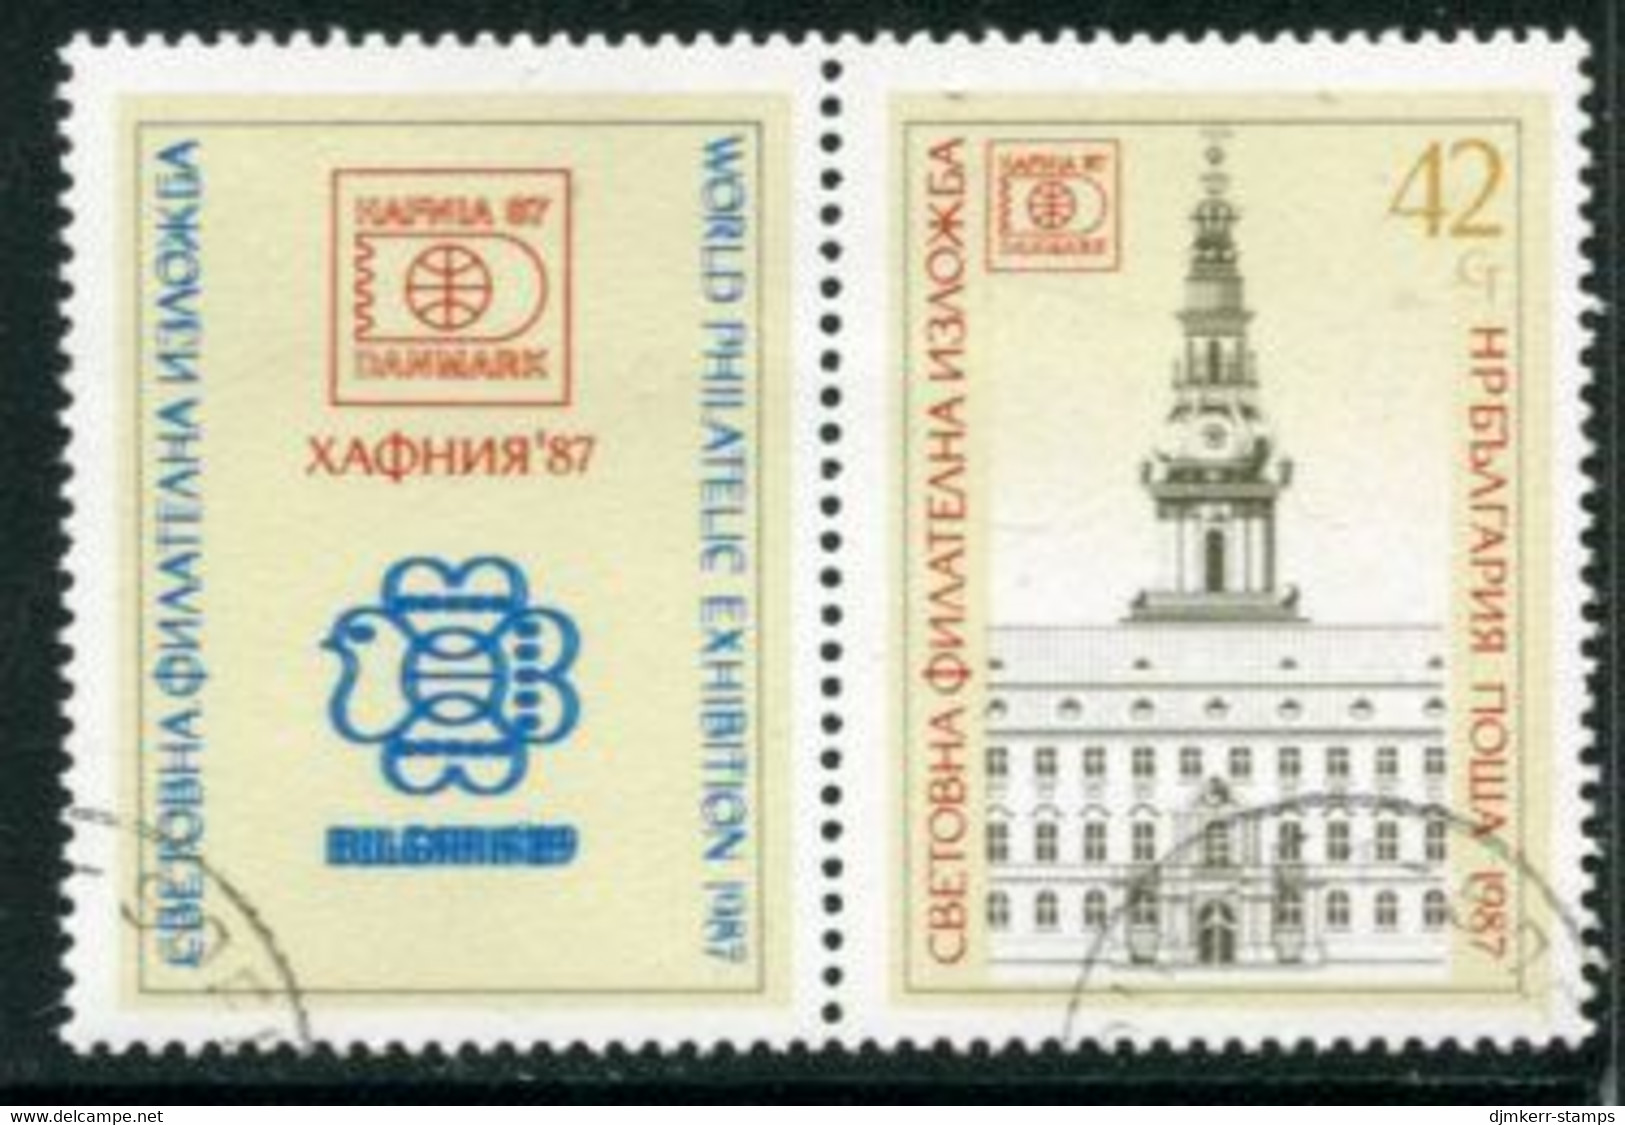 BULGARIA 1987 HAFNIA Stamp Exhibition Used.  Michel 3597 Zf - Gebraucht